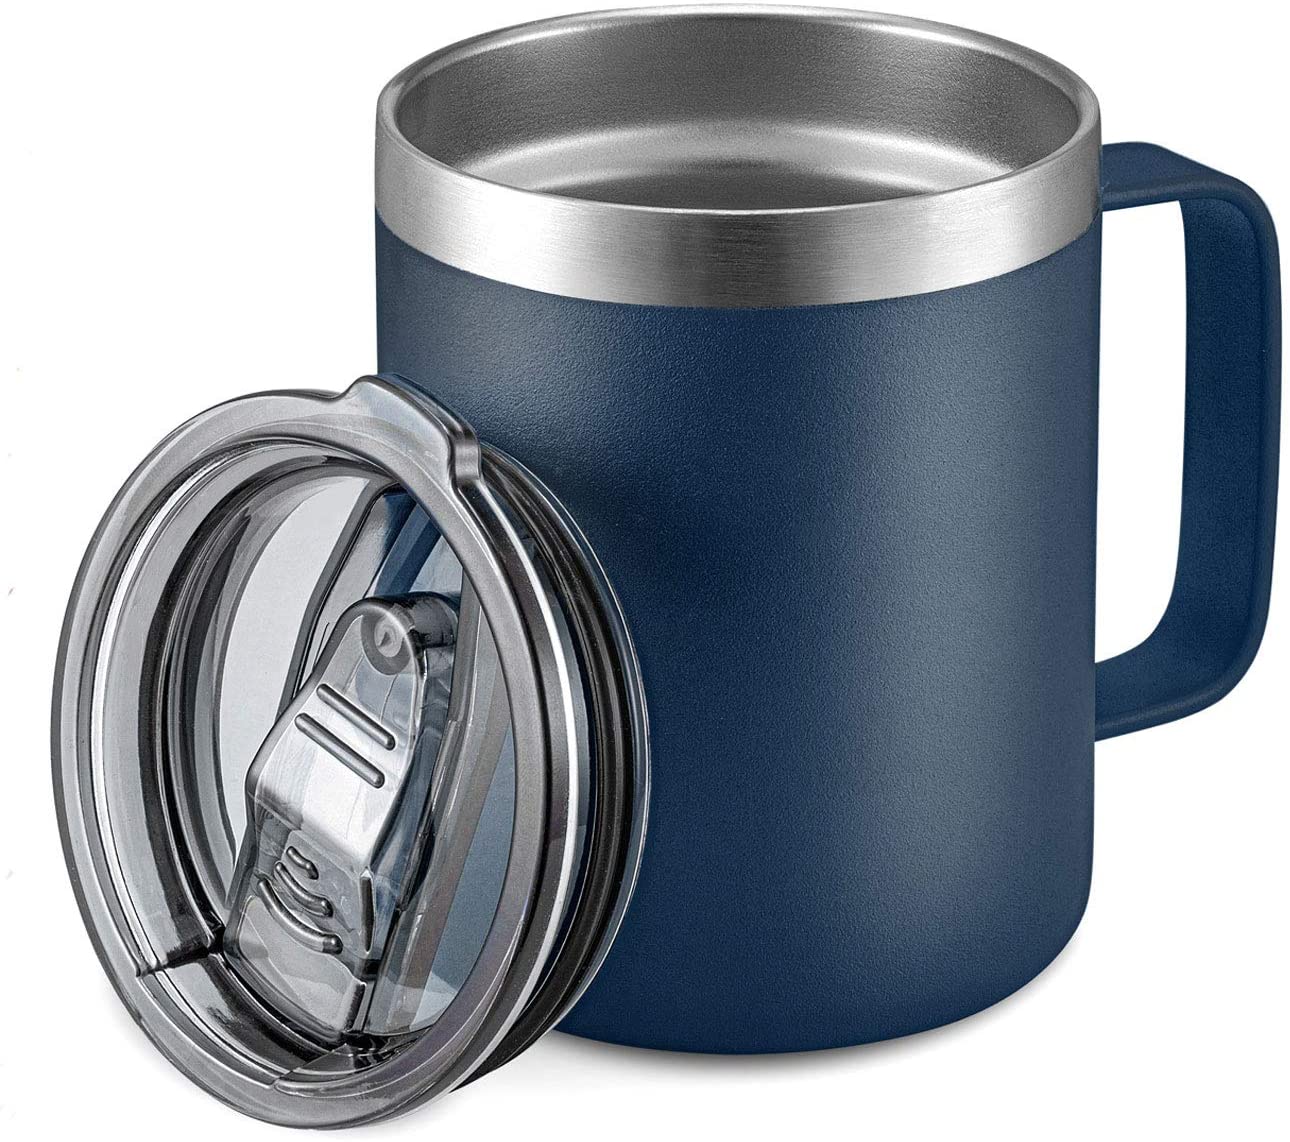 https://www.dontwasteyourmoney.com/wp-content/uploads/2022/02/aloufea-lightweight-sweat-free-insulated-coffee-mug-12-ounce-insulated-coffee-mug.jpg